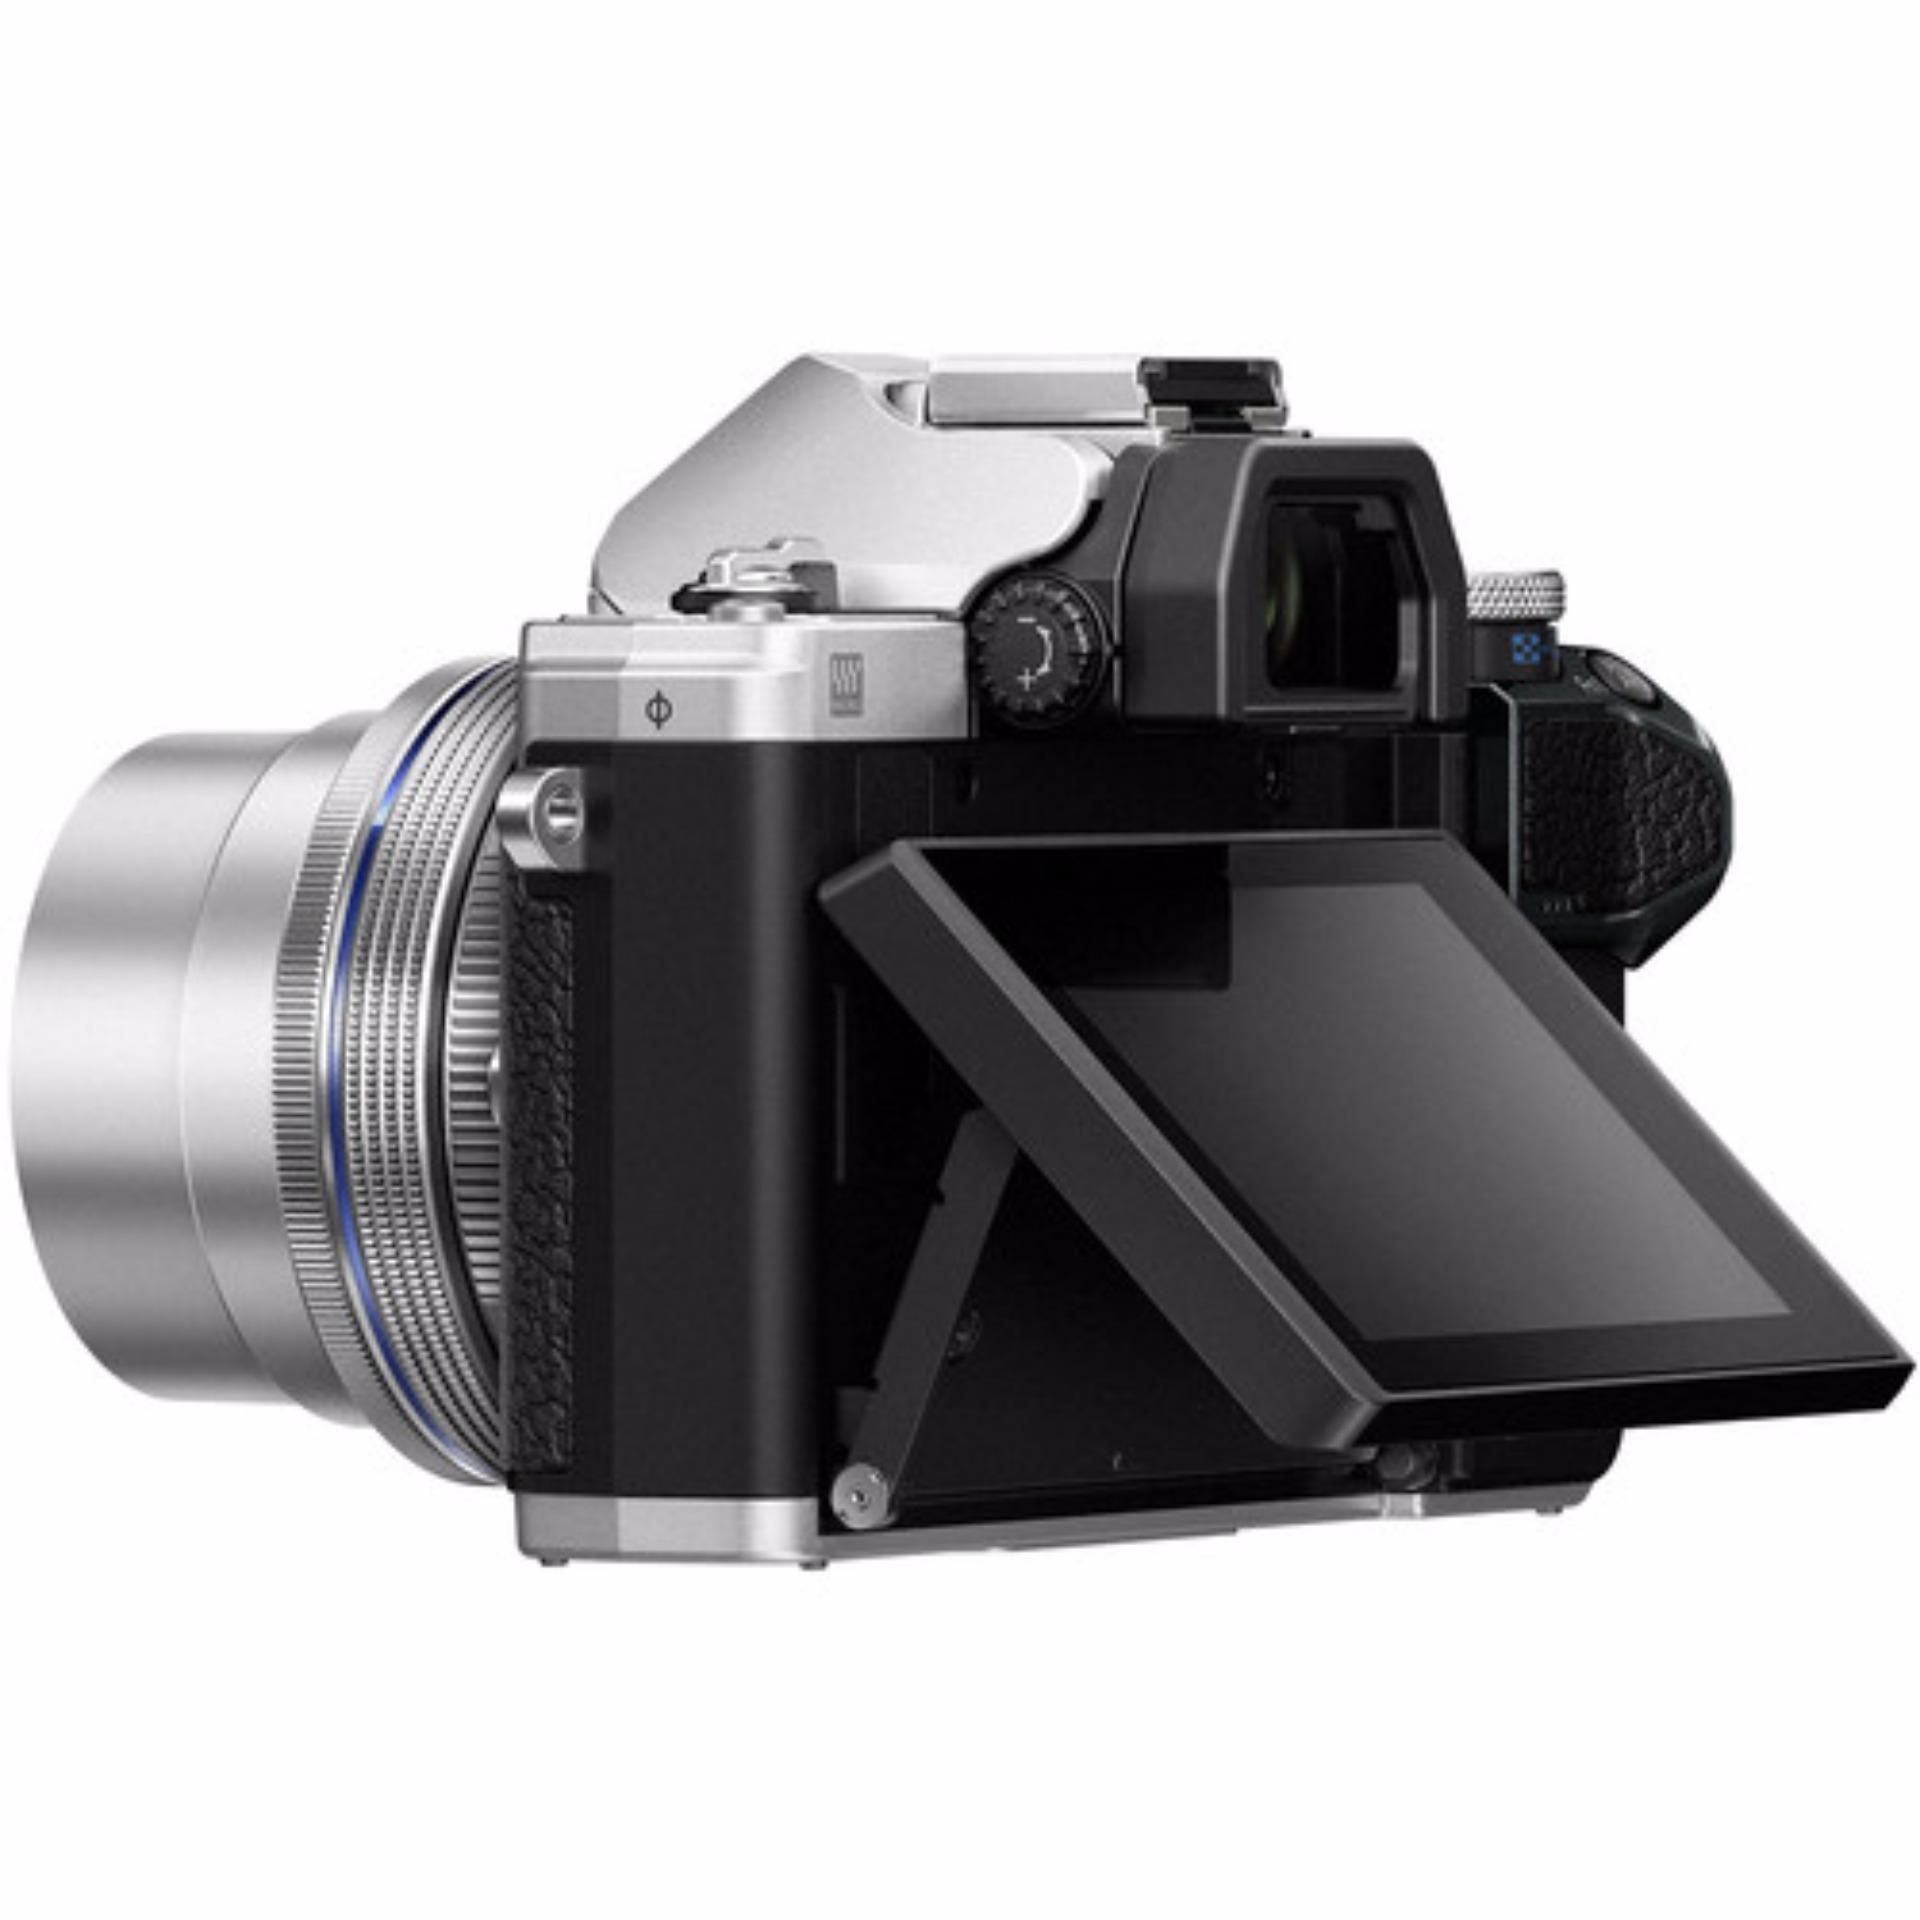 Olympus OM-D E-M10 Mark III SLK Mirrorless Micro Four Thirds Digital Camera with 14-42mm EZ Lens (Silver)